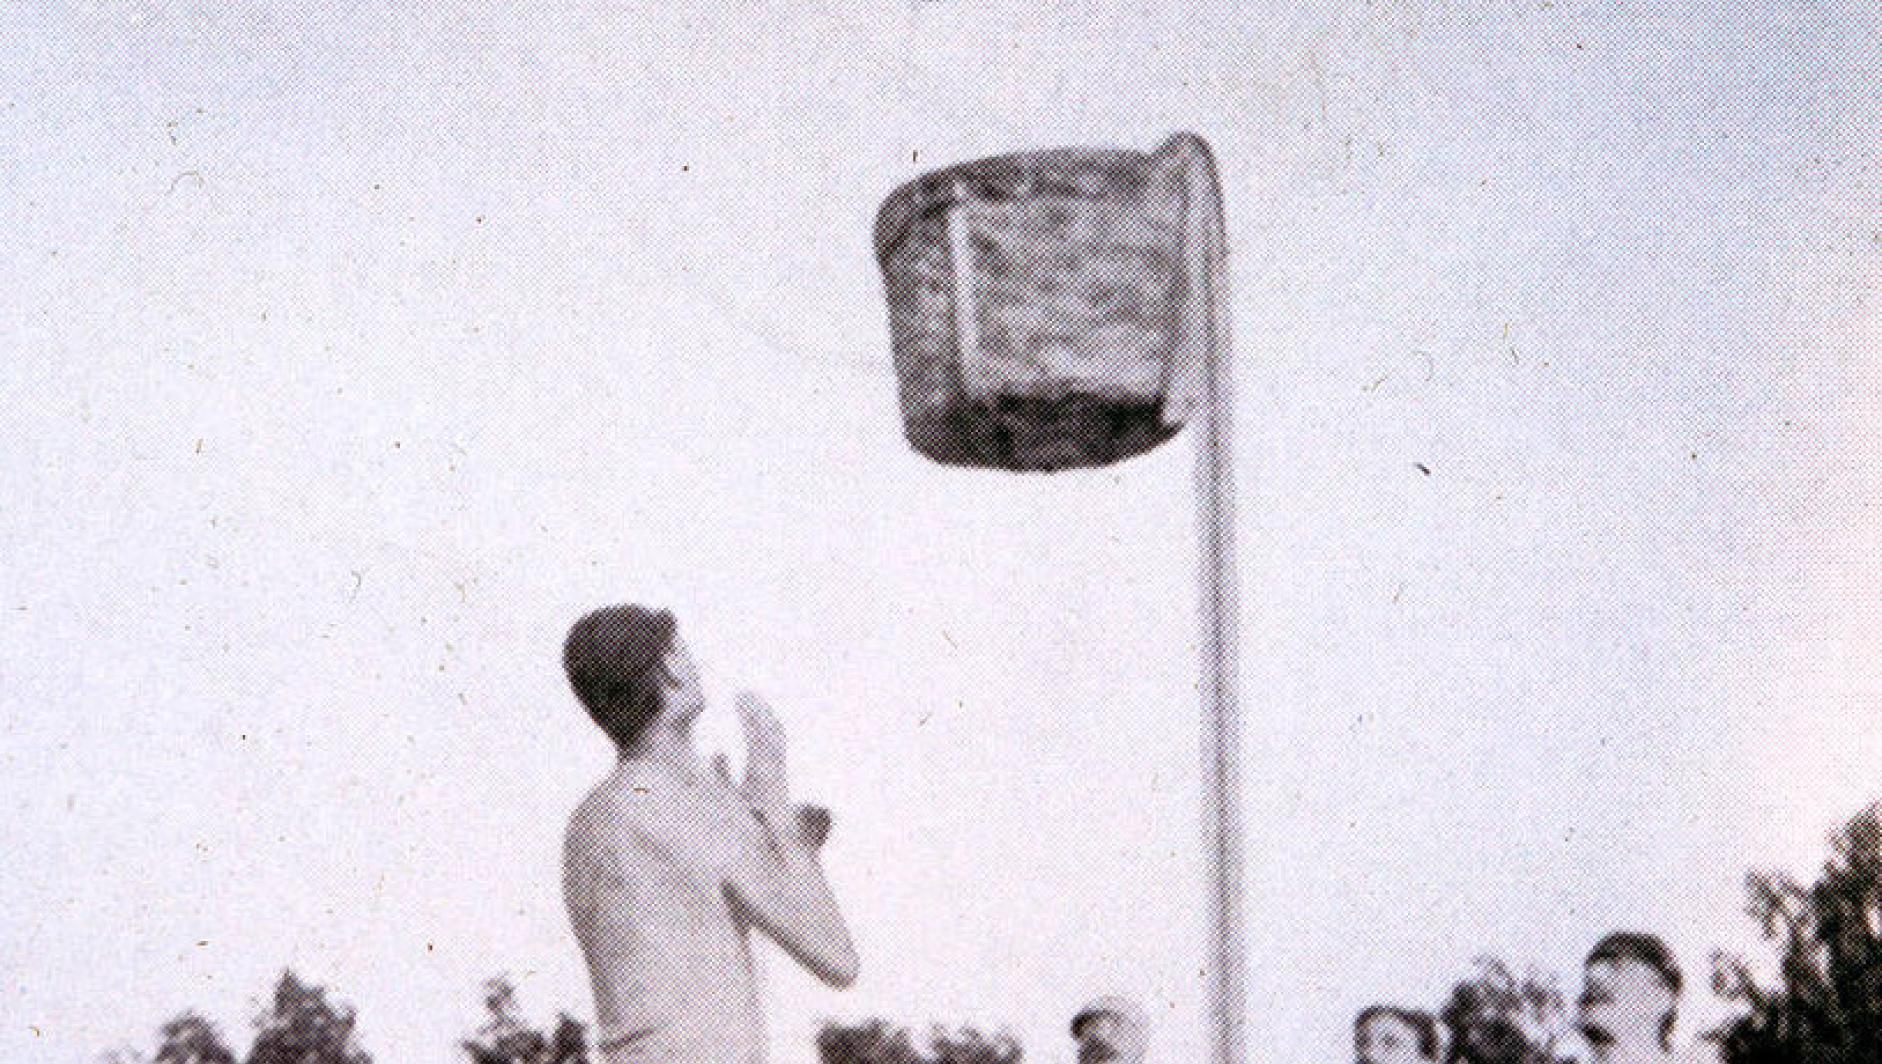 An early basketball game using a peach basket as a hoop.